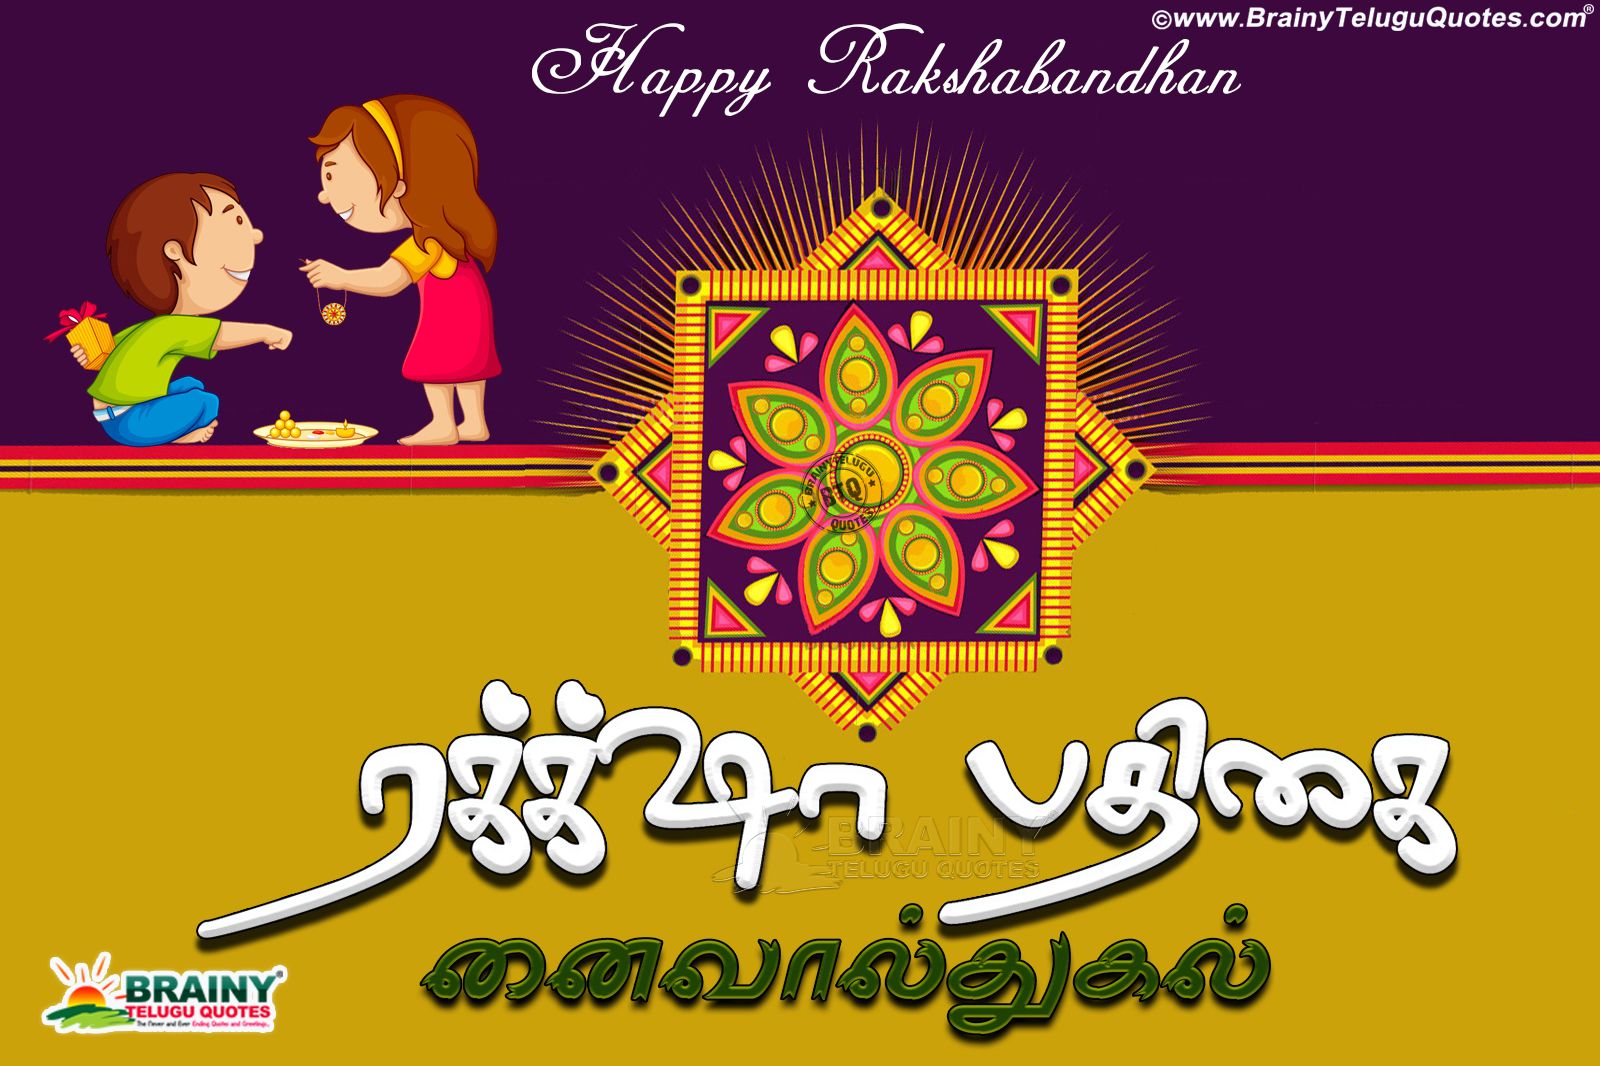 Tamil Rakshabandhan kavithai wishes quotes Greetings With Cute